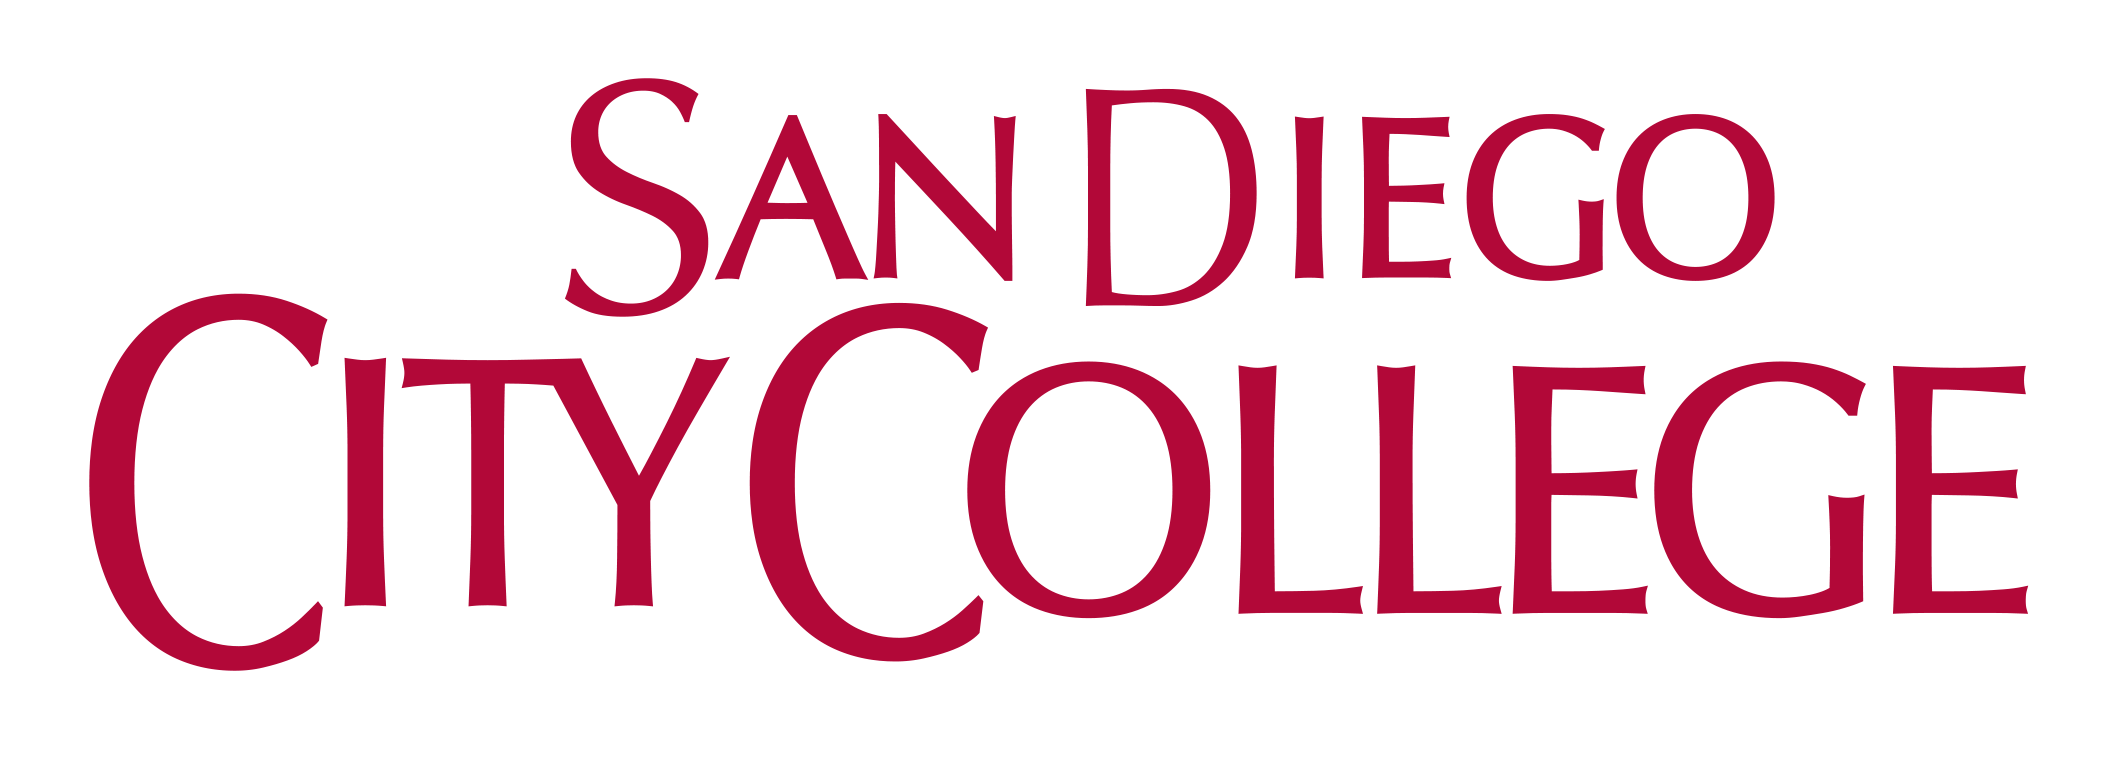 Logo of City College